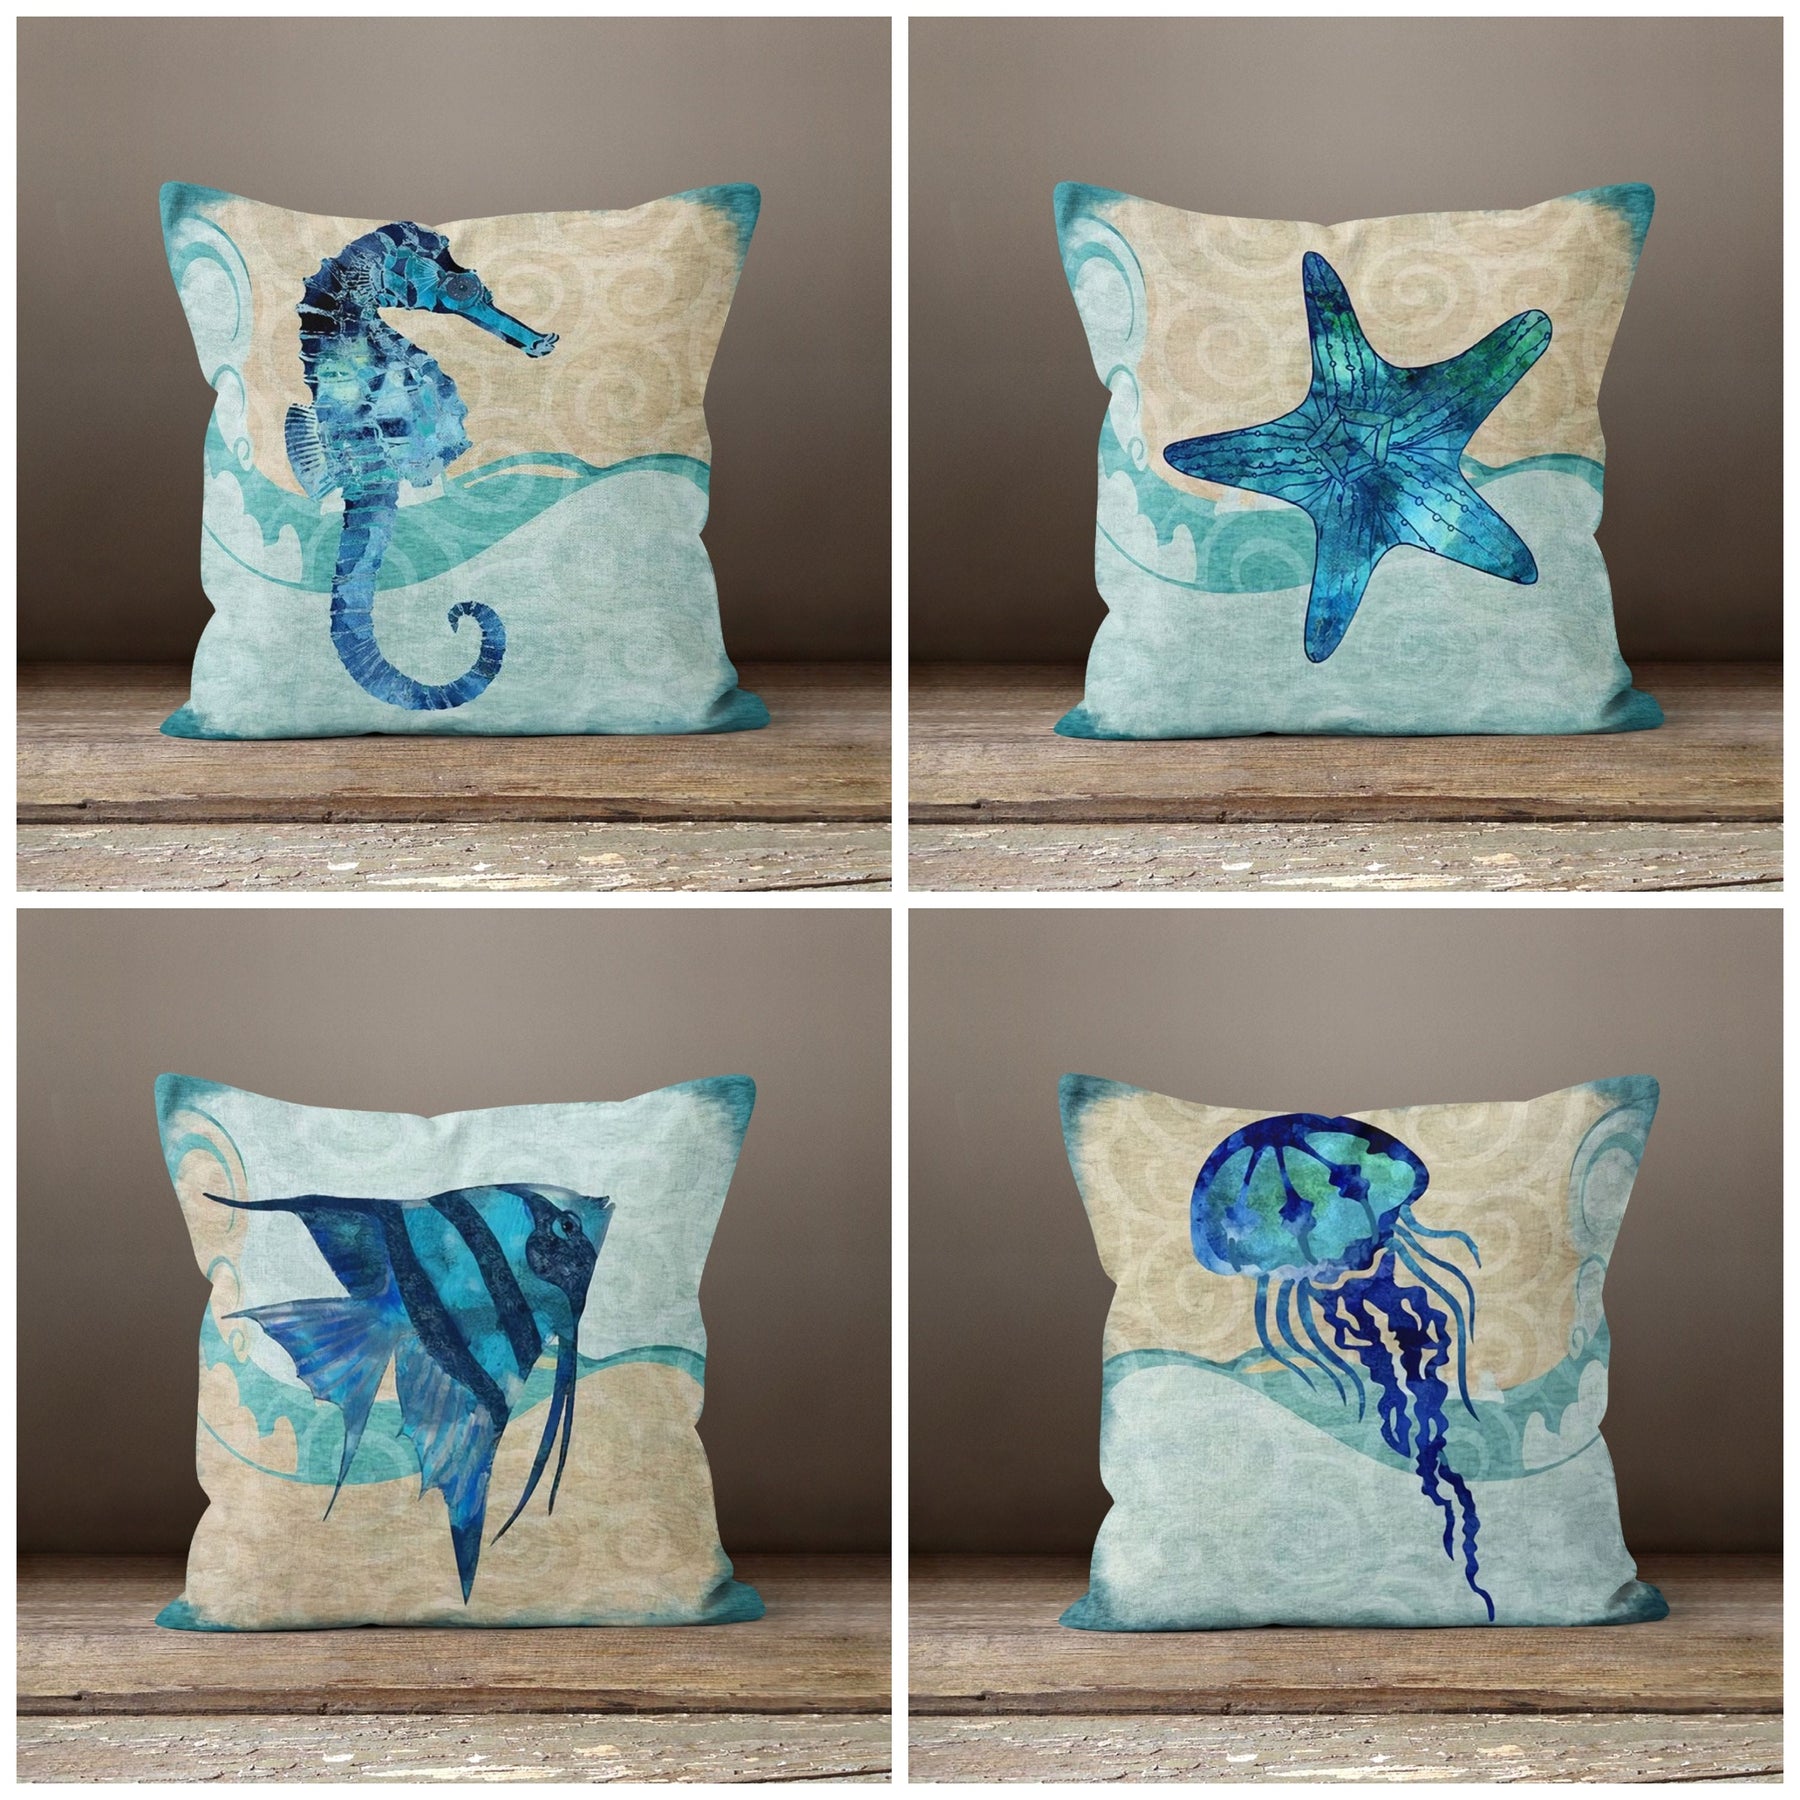 Shop Beach Coastal House Decorative Pillow 18x18 Blue, Pillows